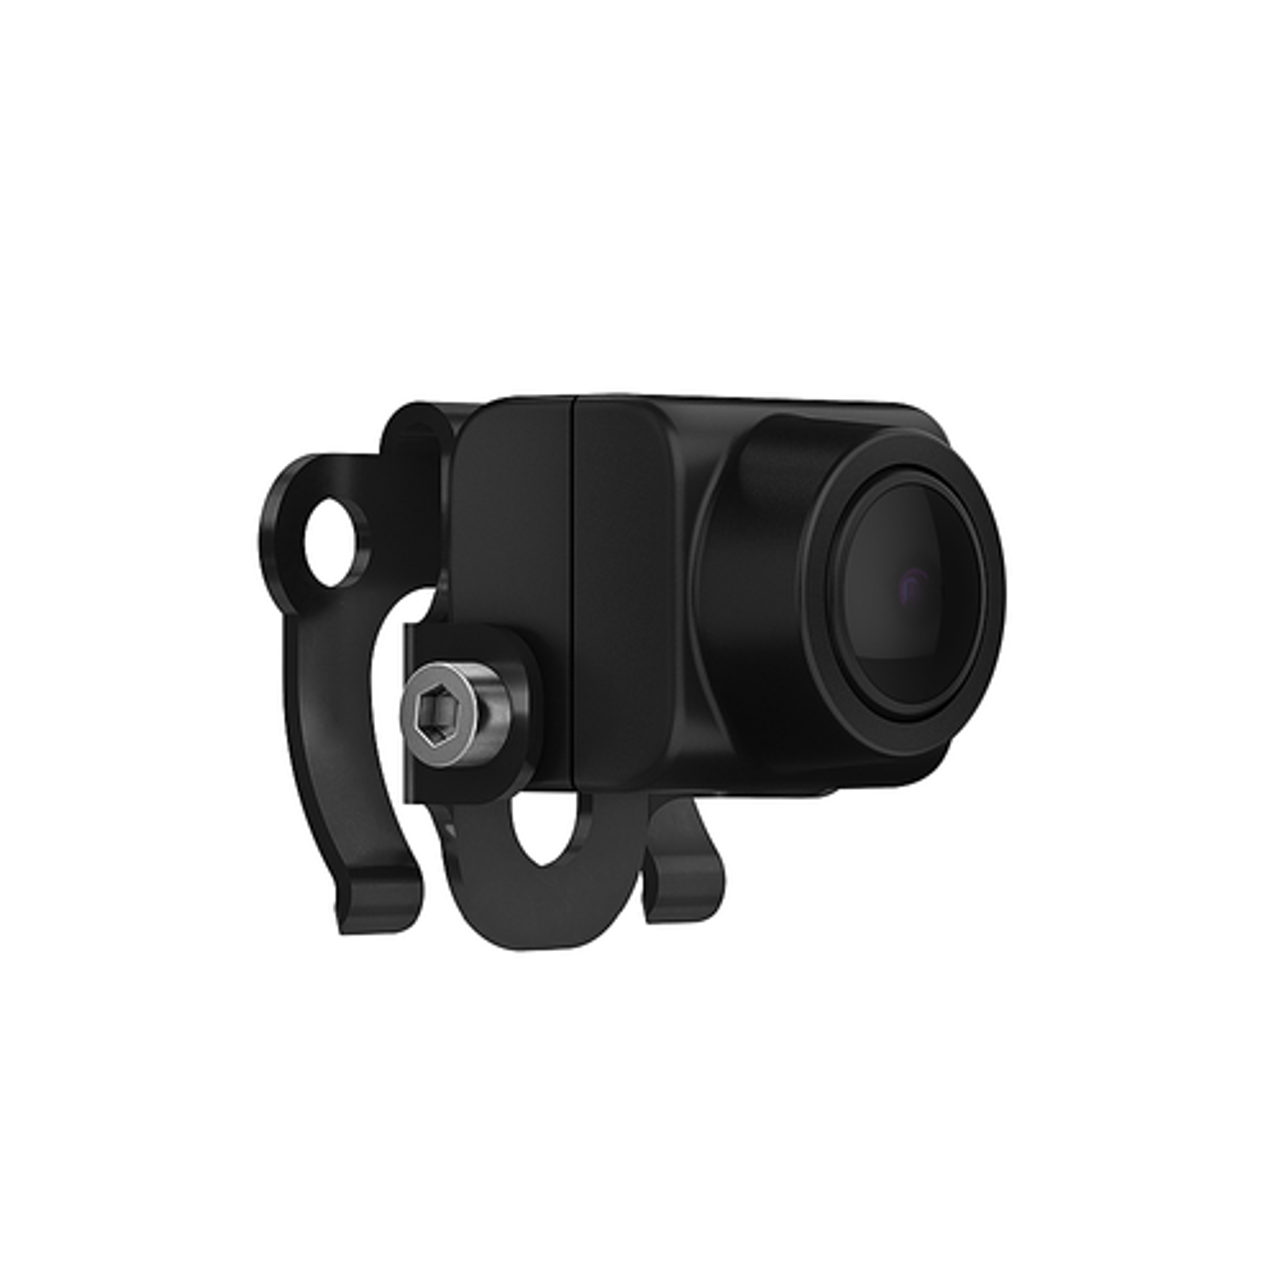 BC 50 Wireless Back-Up Camera for Select Garmin GPS - Black